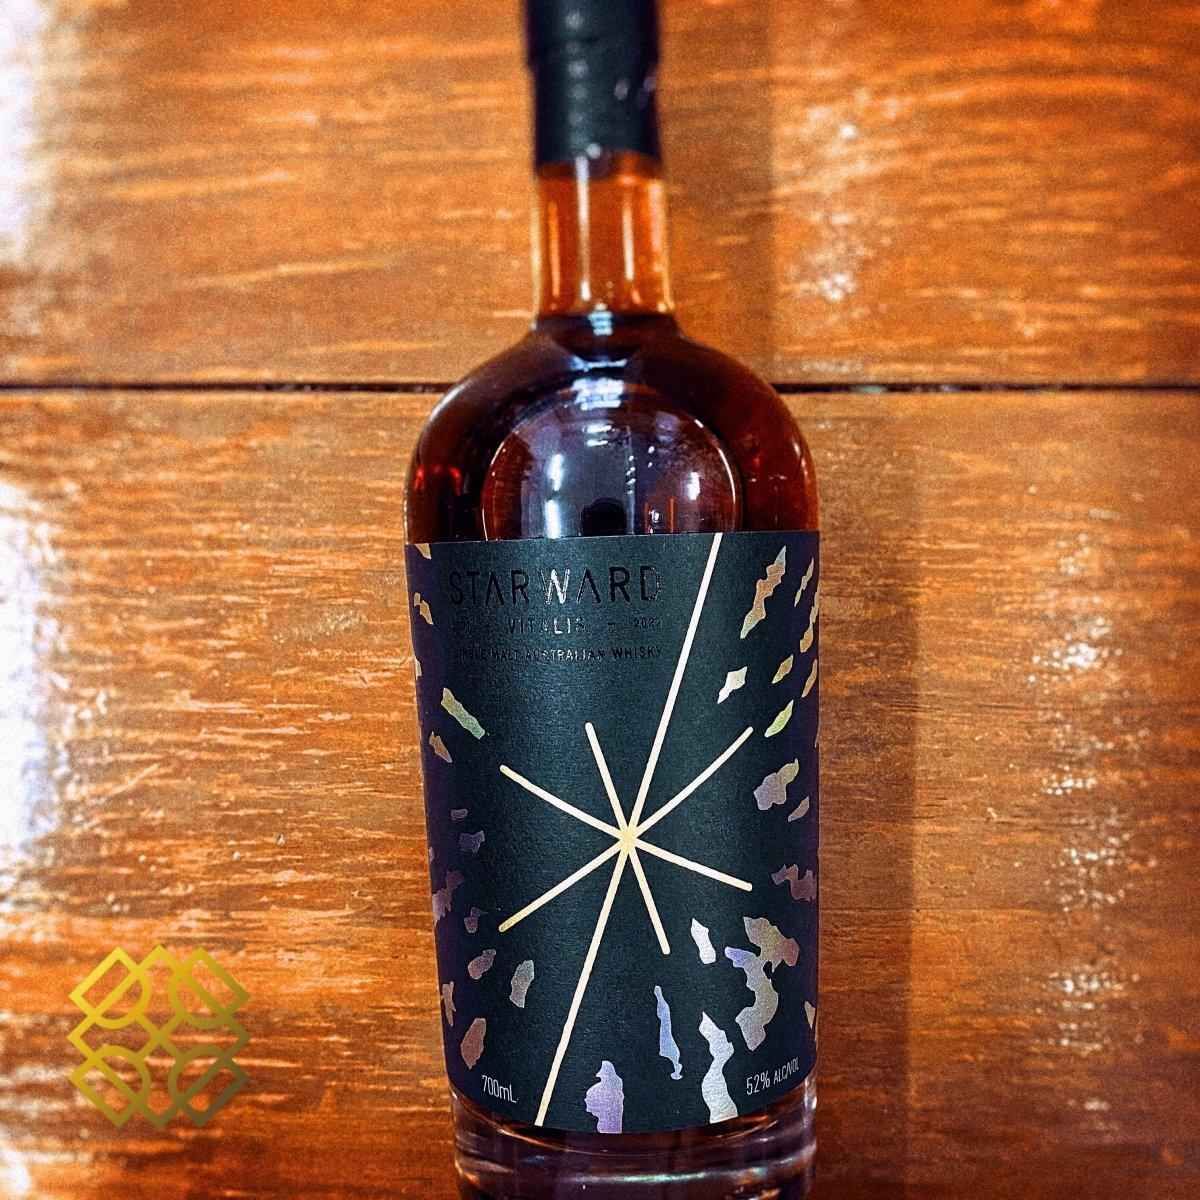 Starward - Vitalis, 15th Anniversary Limited Edition, 52%  Type : Single malt whisky 威士忌